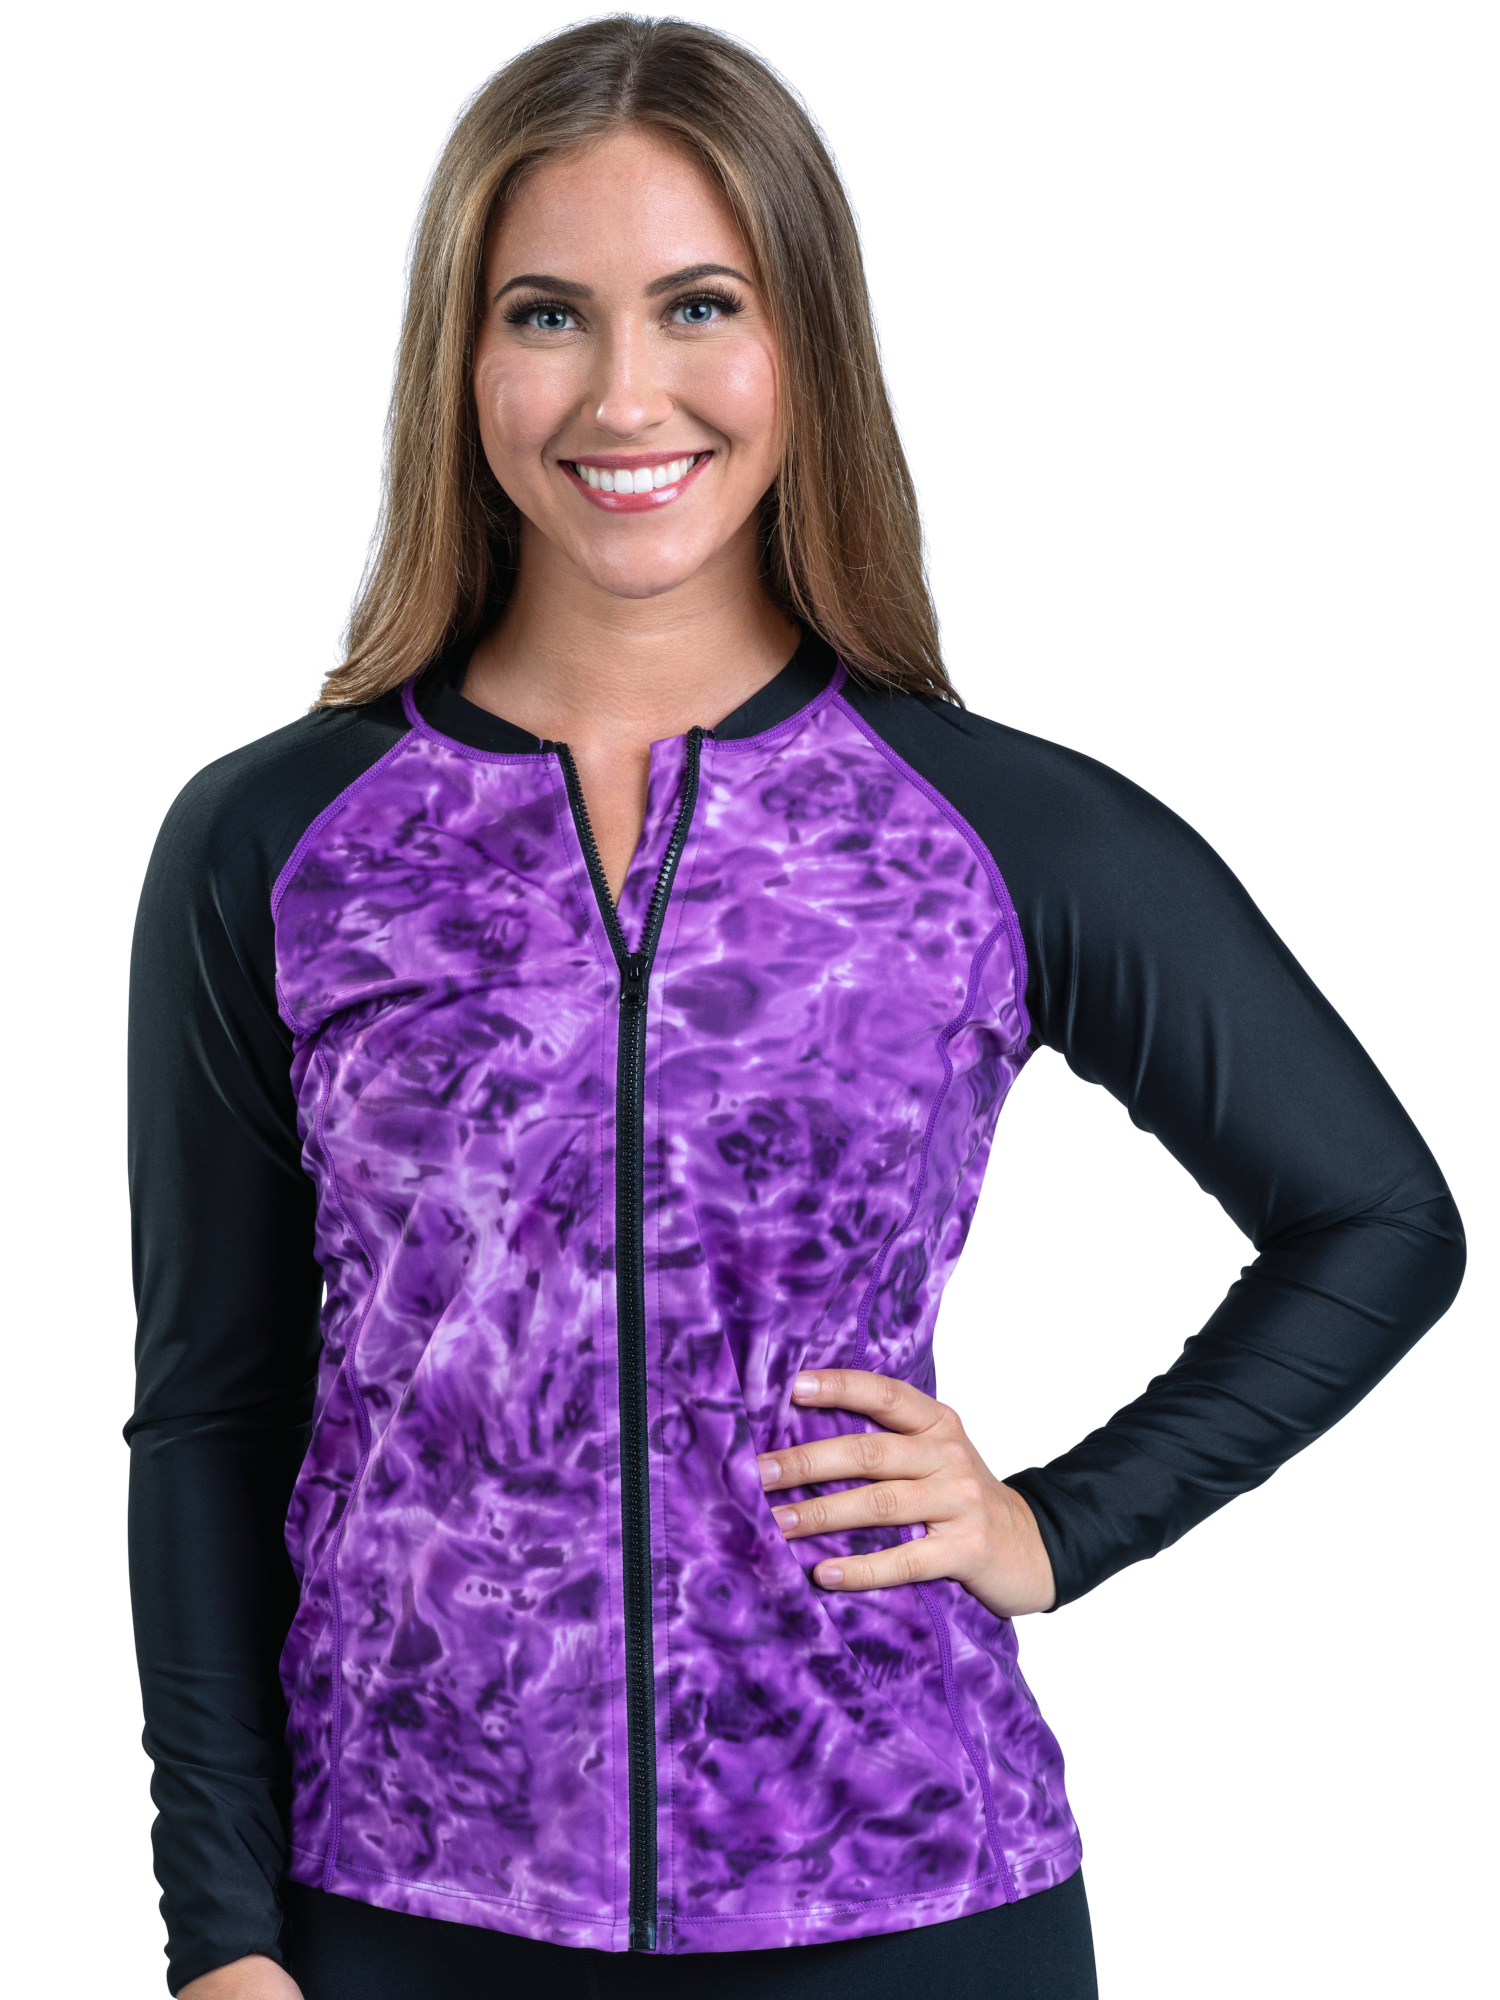 Aqua Design Womens Full Zip Long Sleeve Rash Guard: Front Zipper Swim Shirt: Liquid Purple/Black size 5XL - image 1 of 7